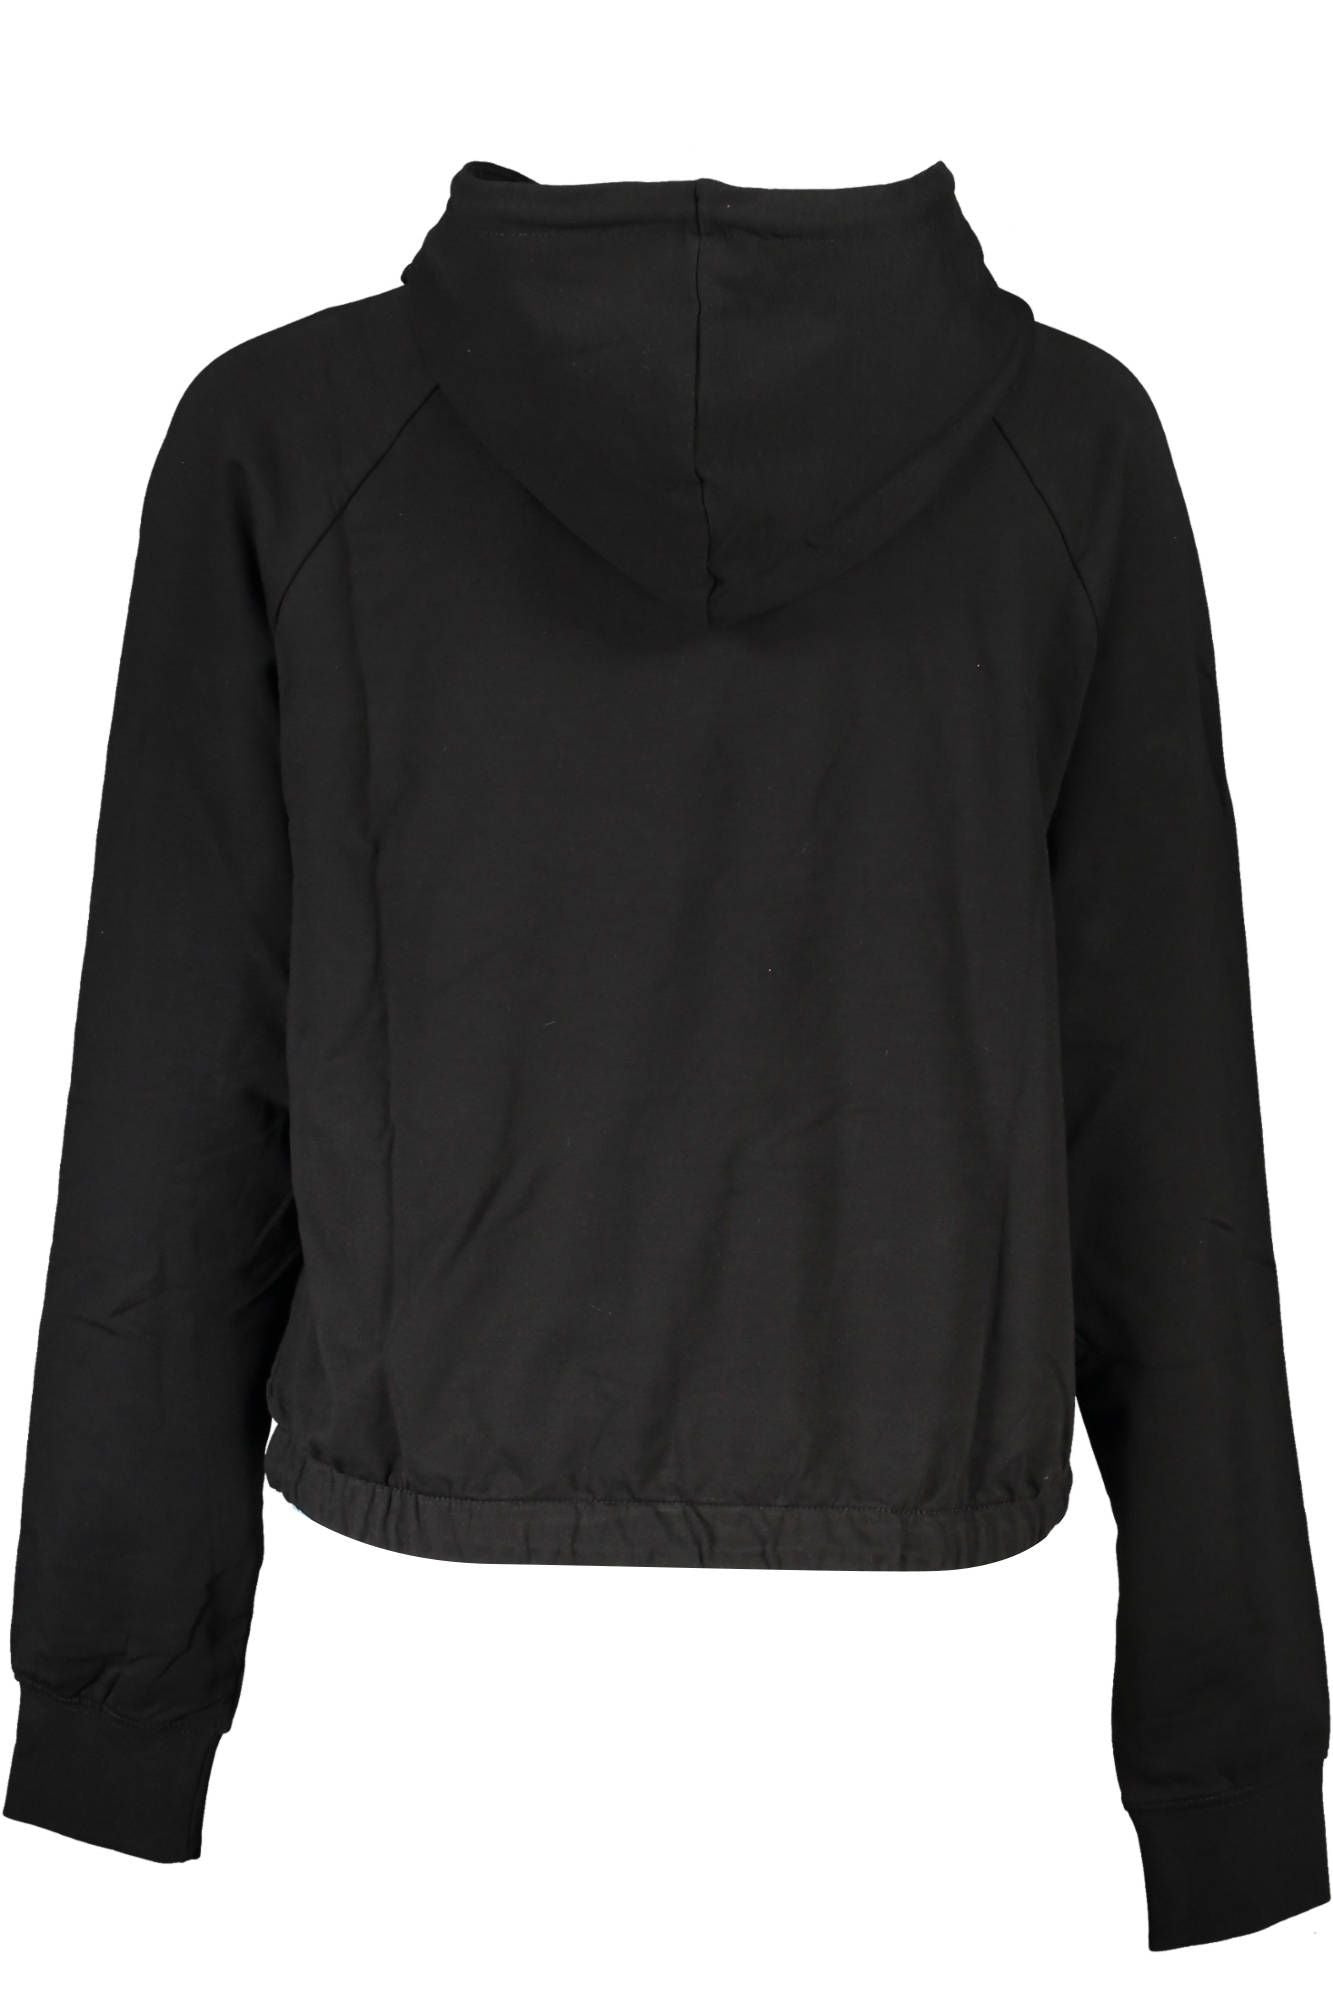 Fila Women's Black Cotton Sweater Hoodie